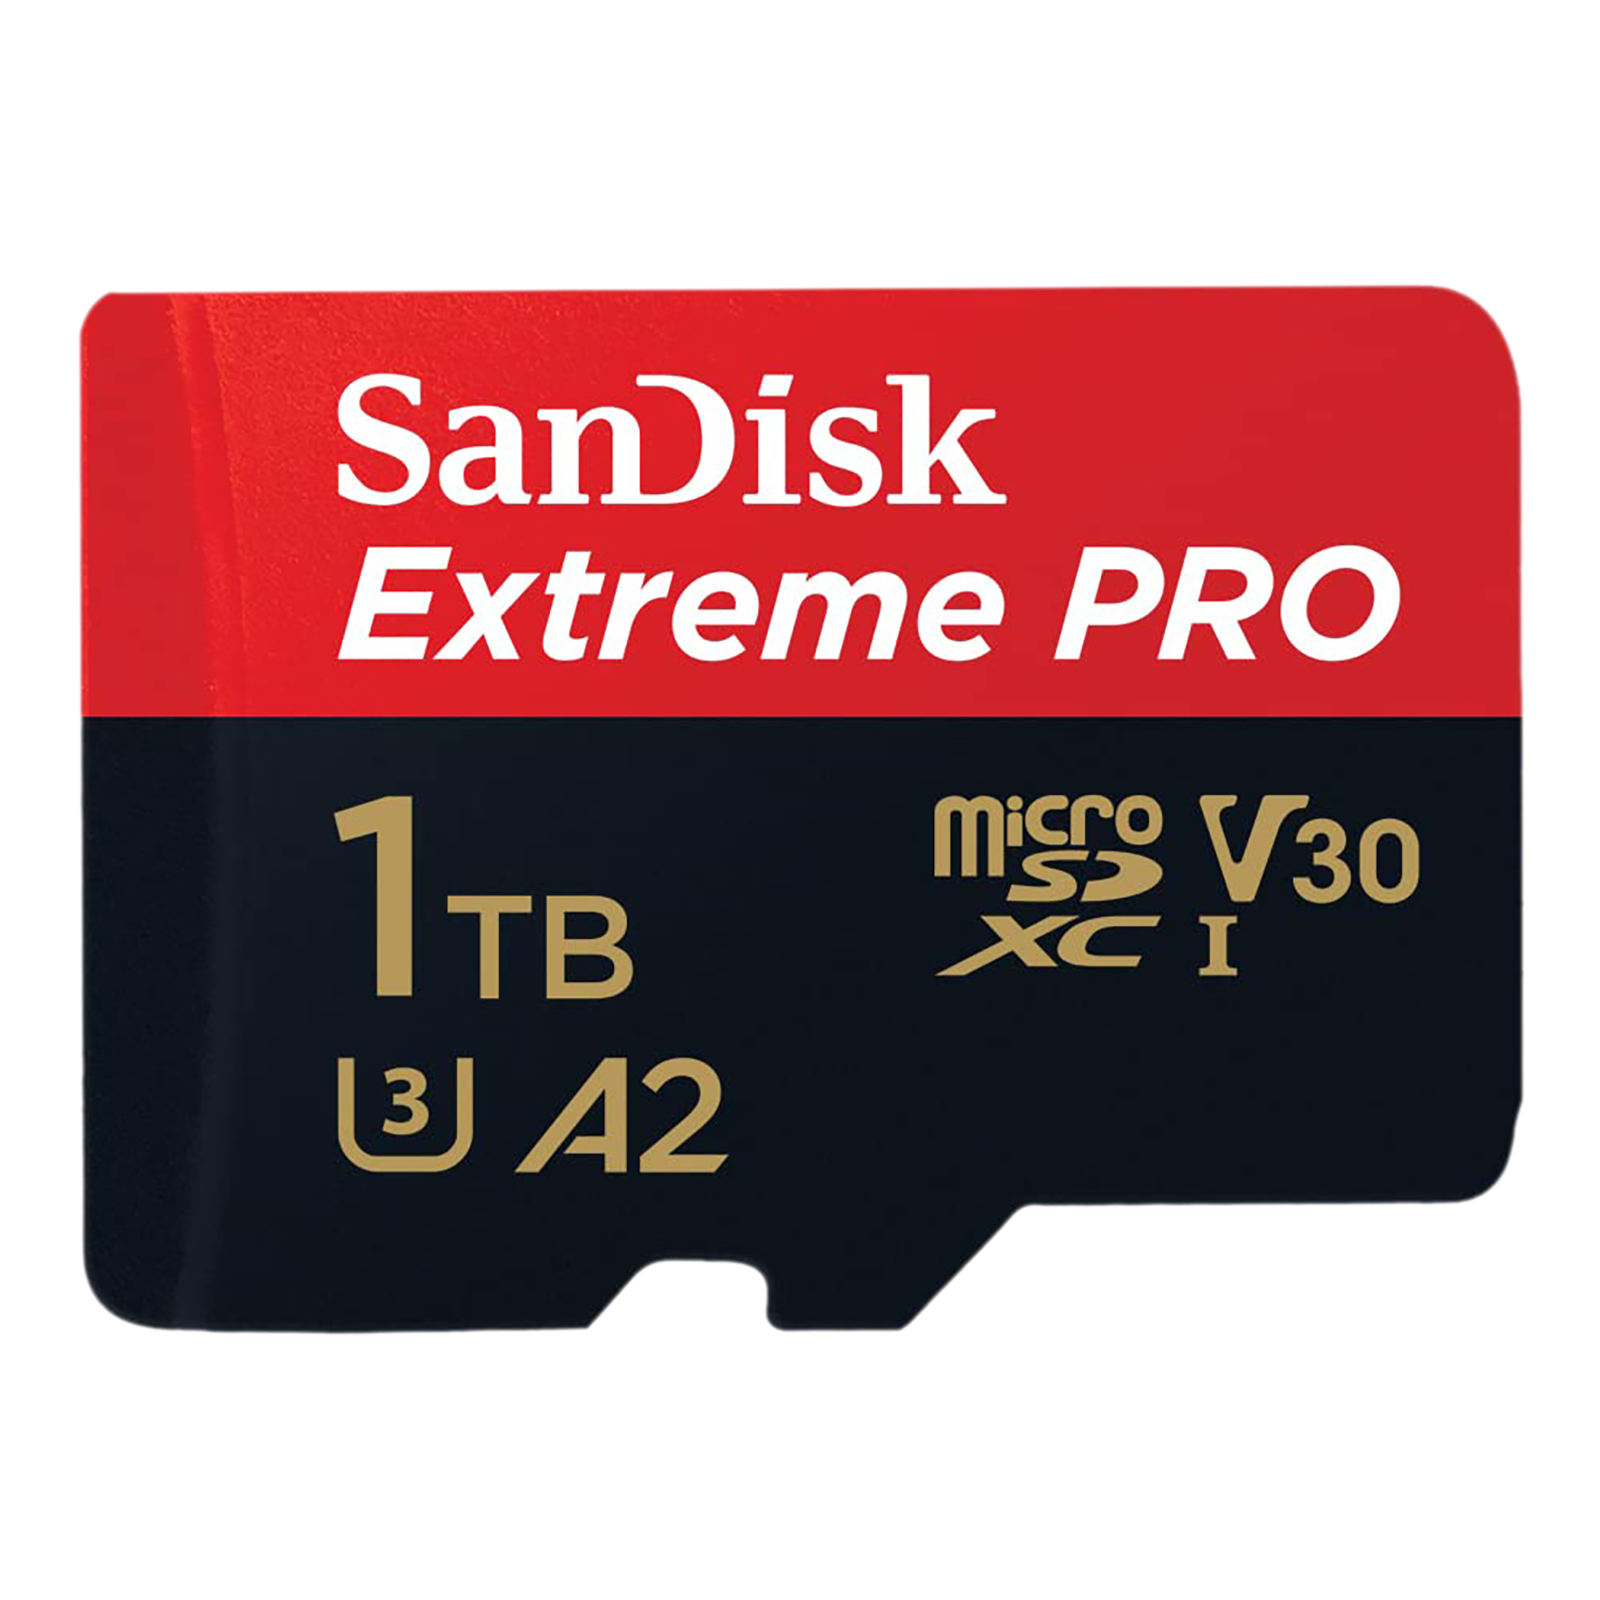 SanDisk Extreme Pro MicroSDXC 1TB Class 3 200MB/s Memory Card